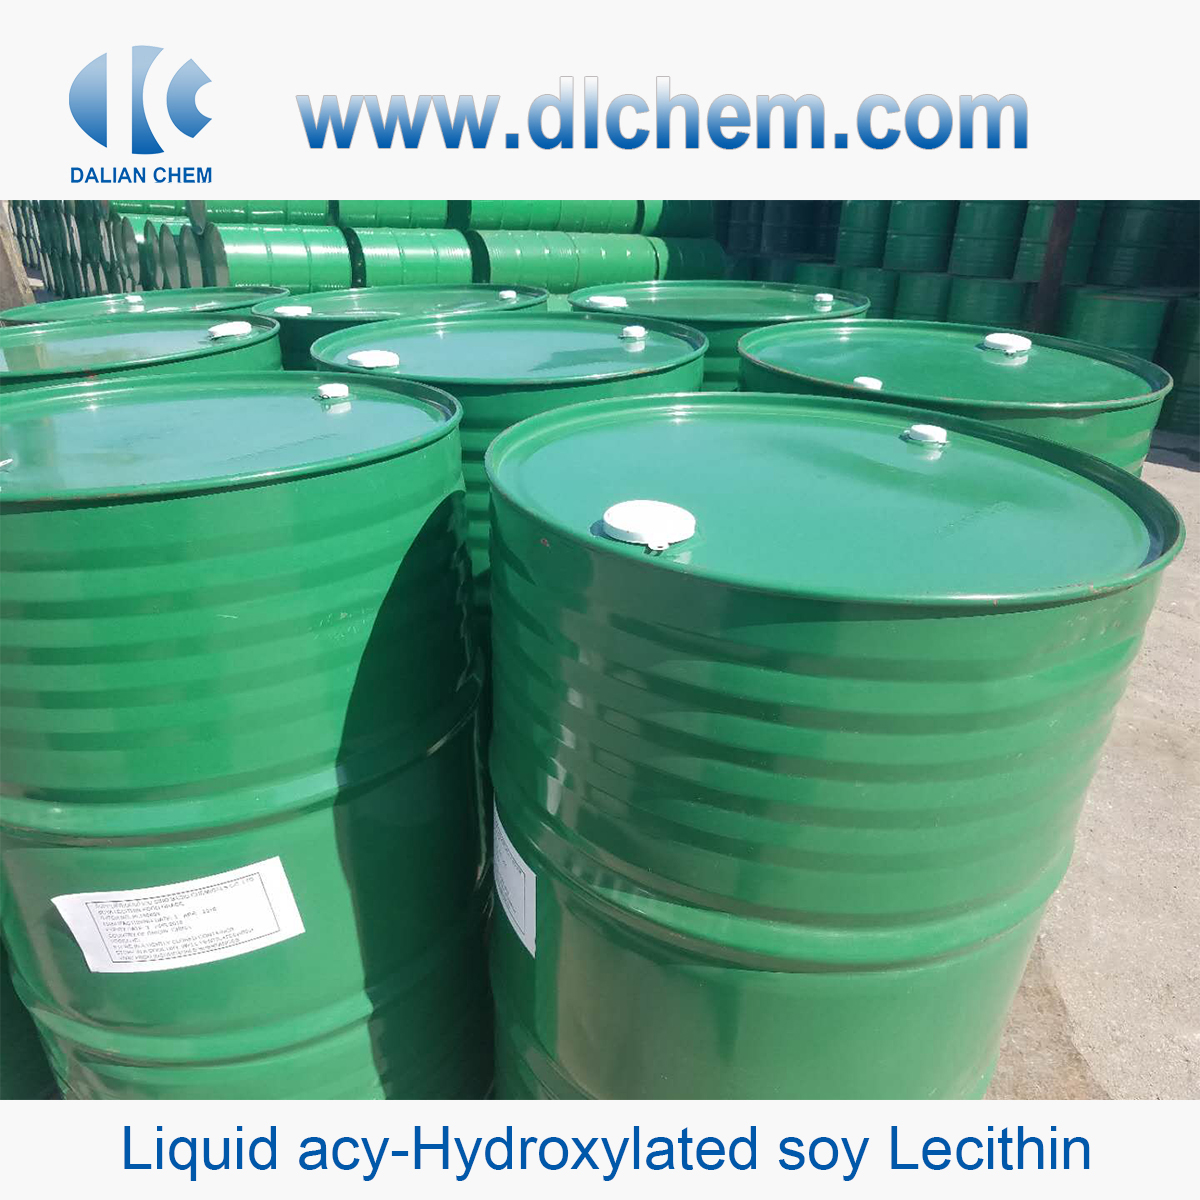 Liquid acy-Hydroxylated soy Lecithin